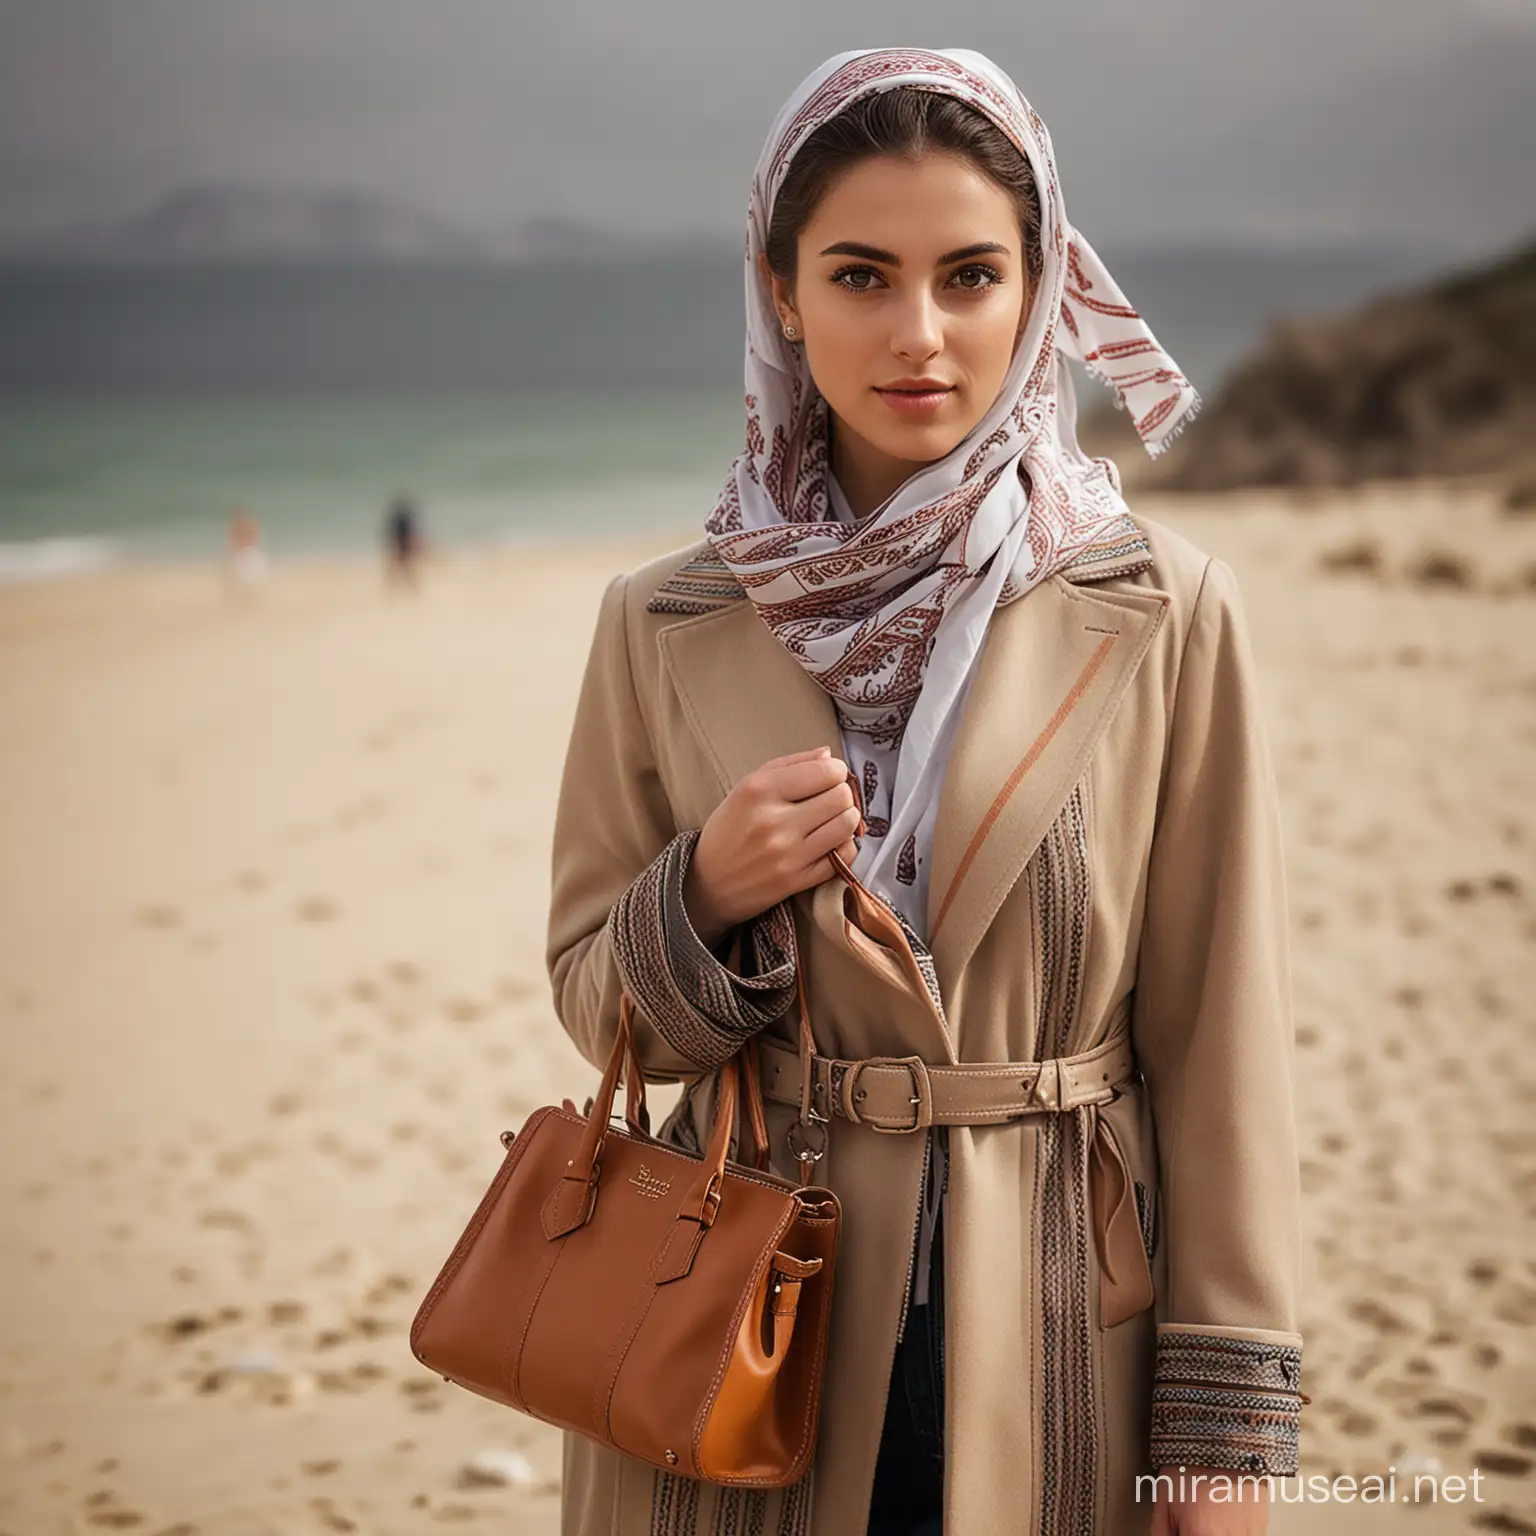 Stylish Tehraninspired Girl with Leather Bag on Beach Street